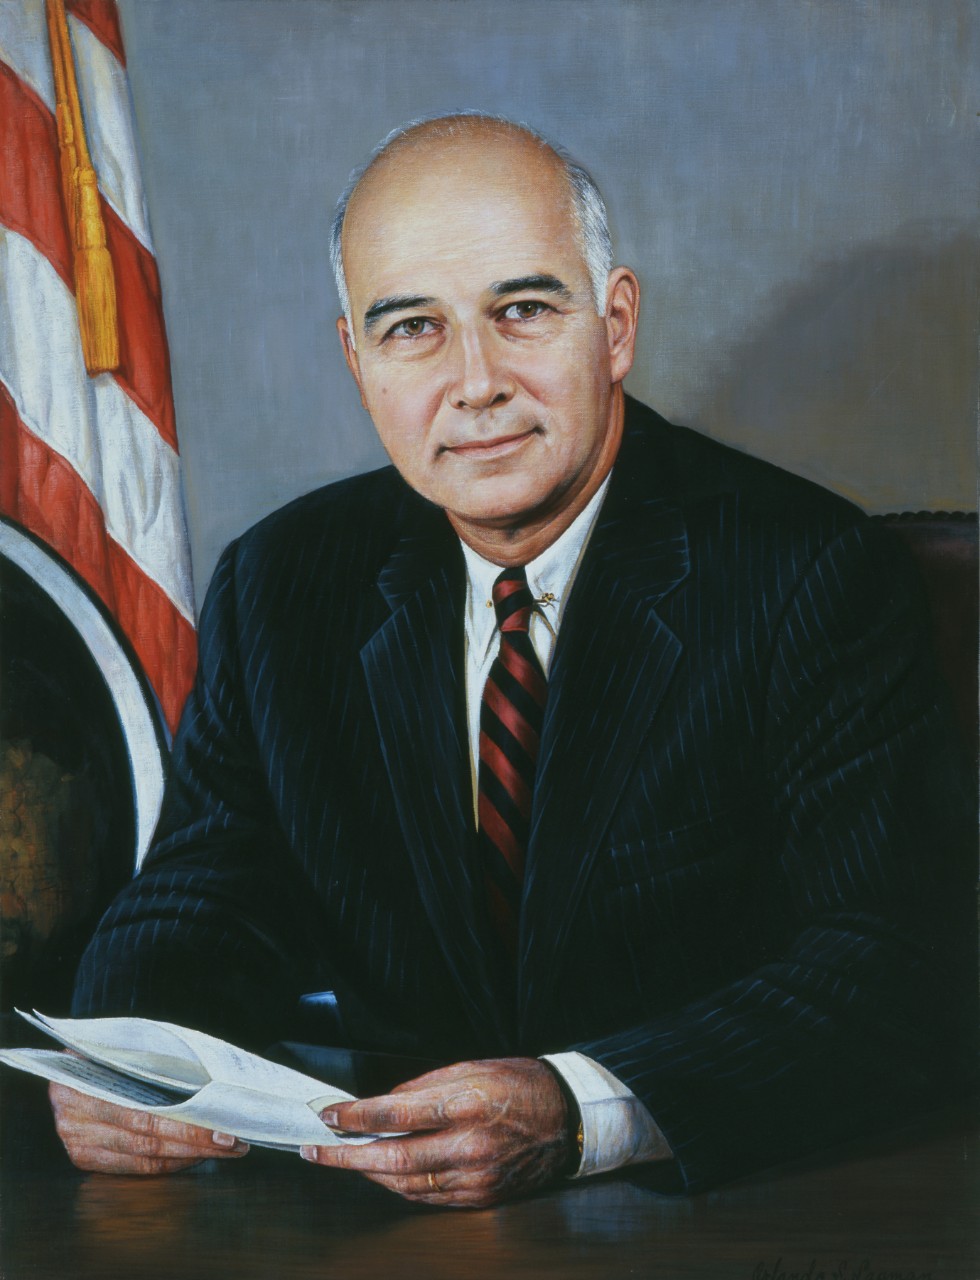 Portrait of Secretary of the Navy Paul Robert Ignatius